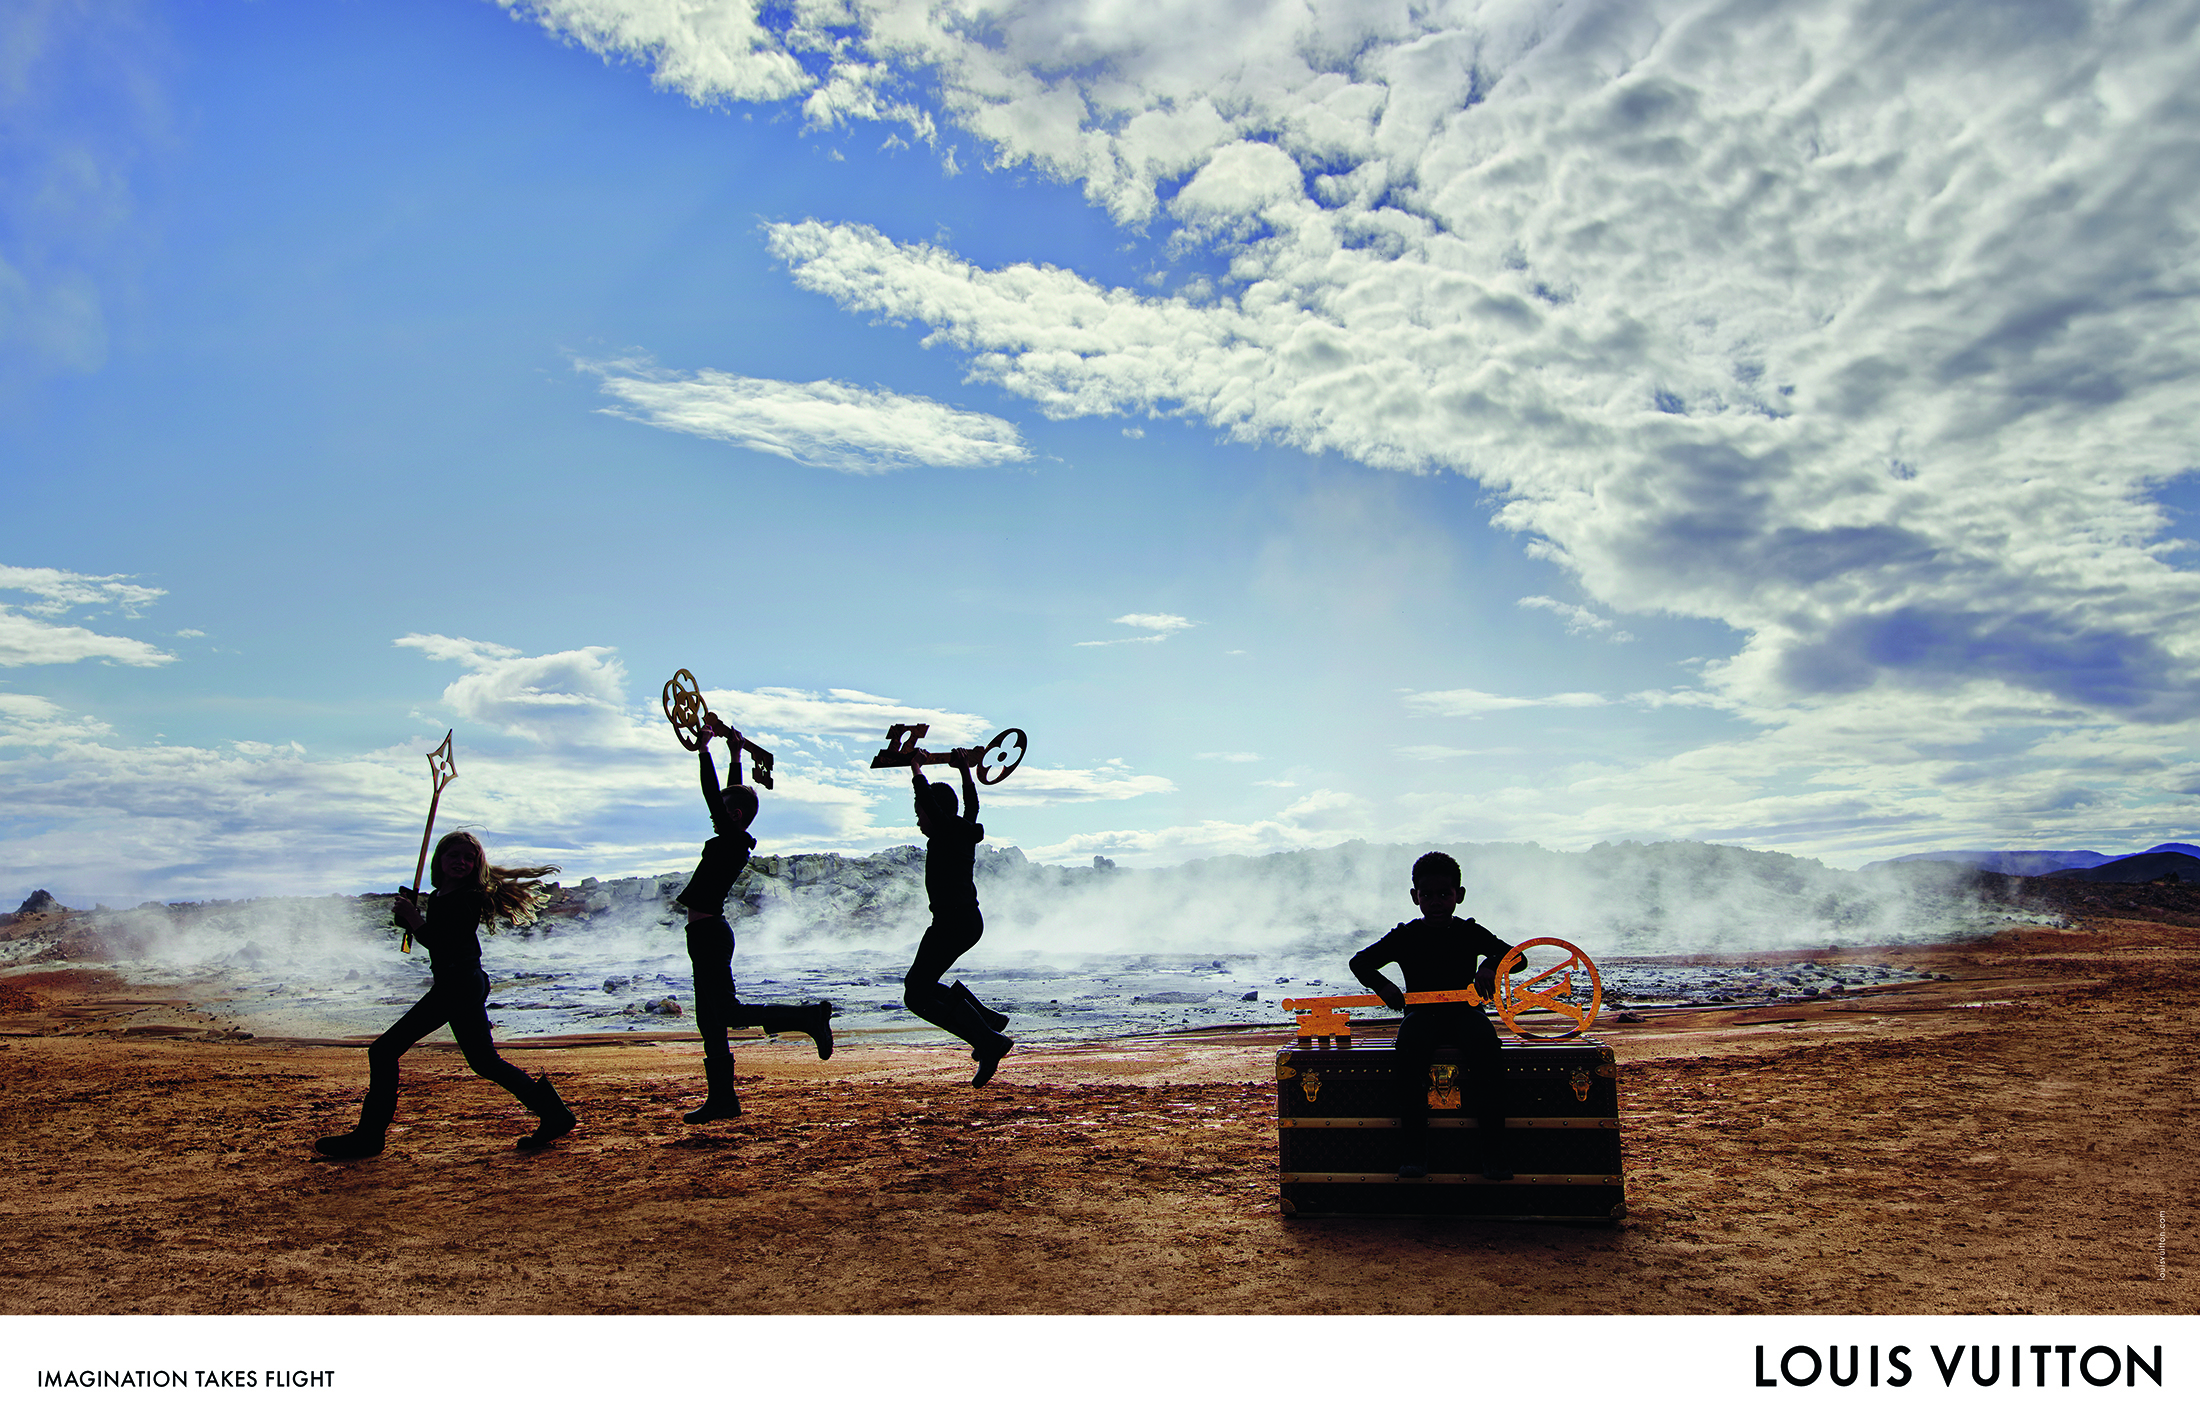 Louis Vuitton 'Towards A Dream' Fall 2020 Ad Campaign